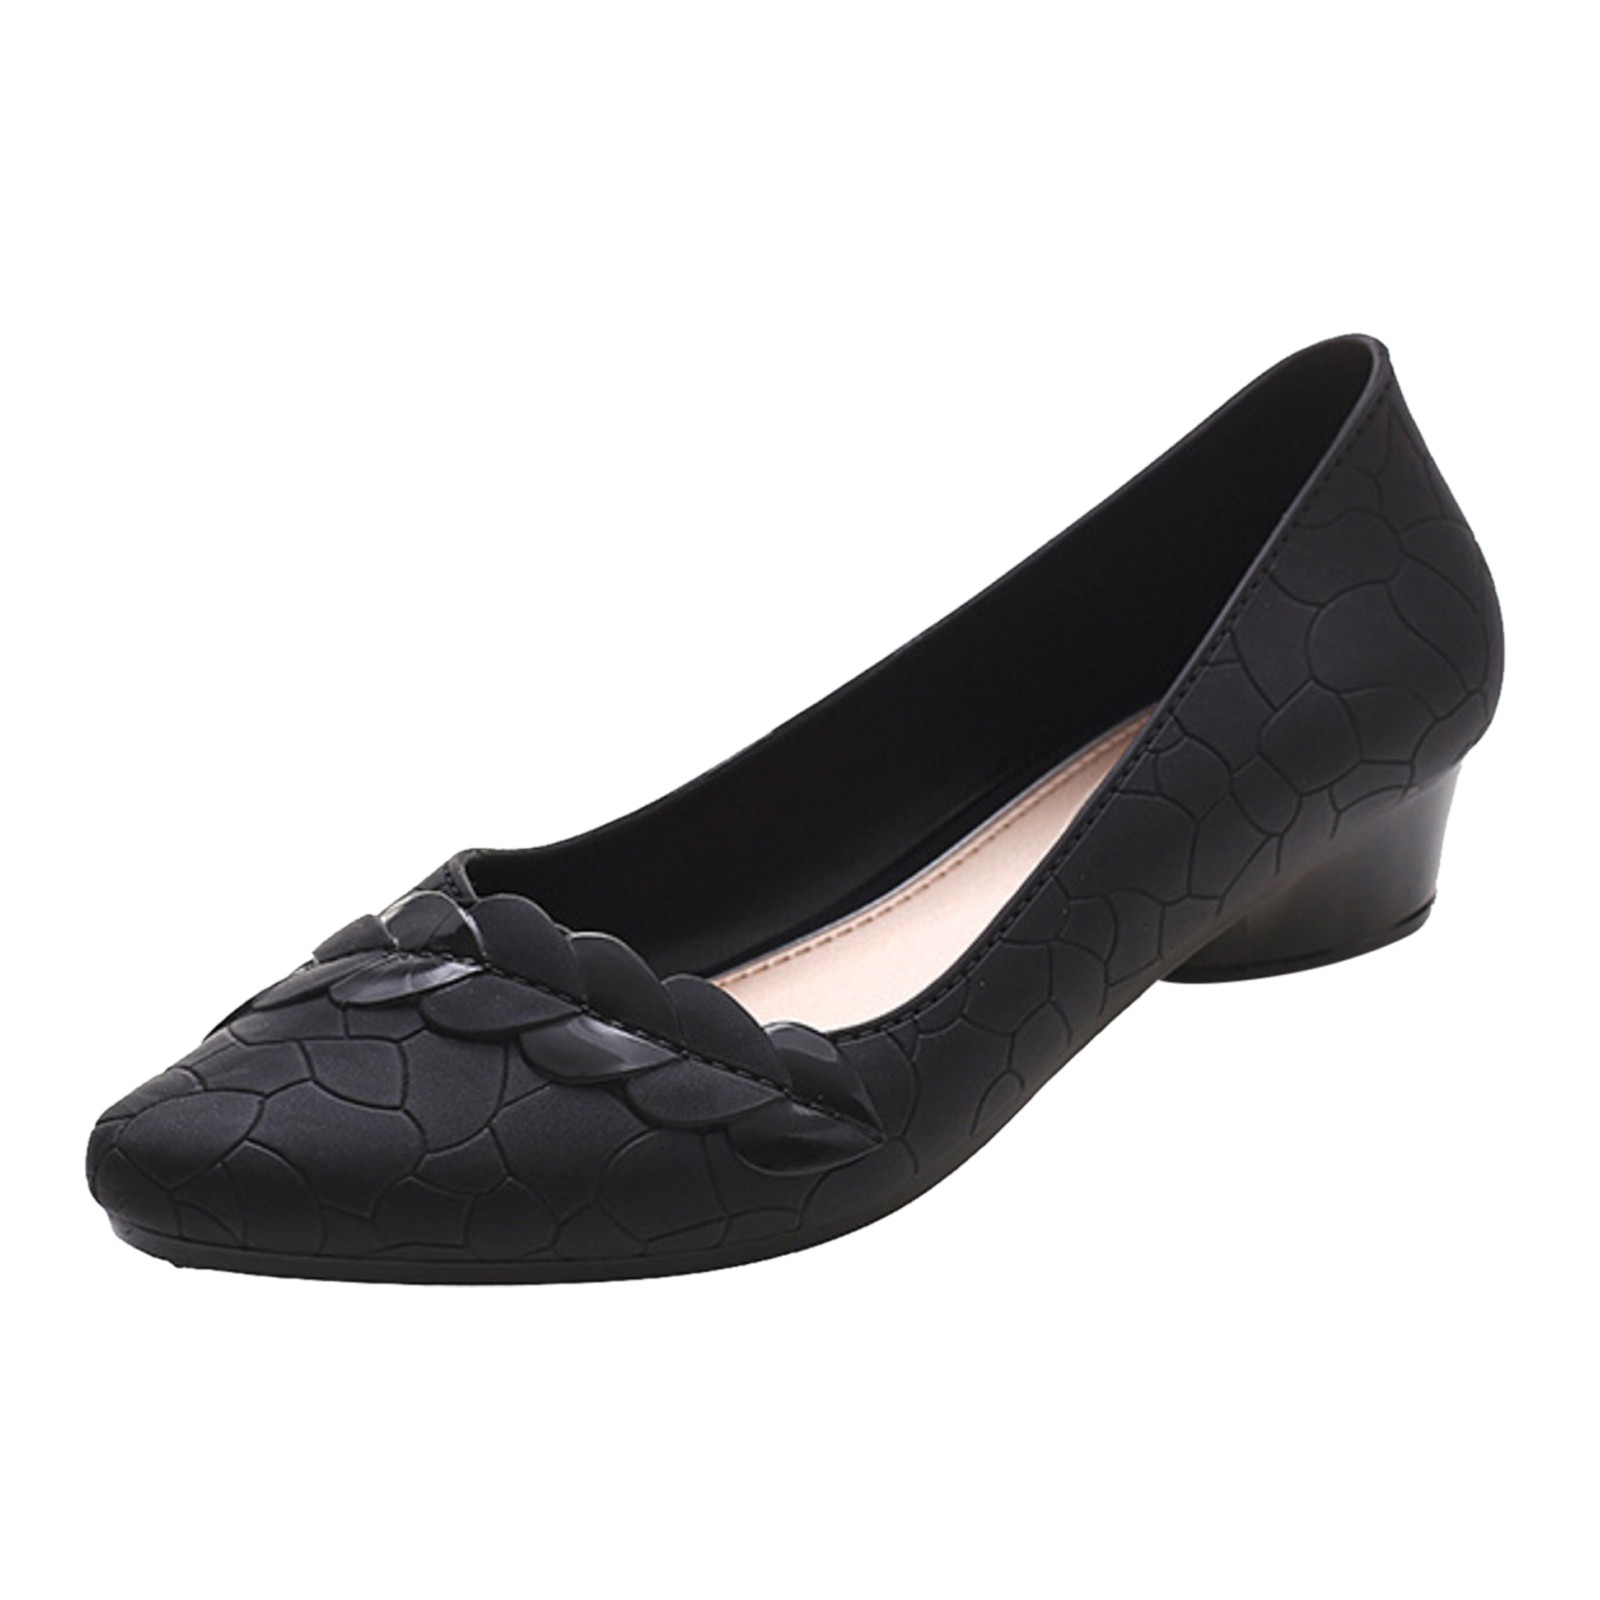 Black Sandals Women Comfortable Fashionable Summer Flat Bottom Shallow ...